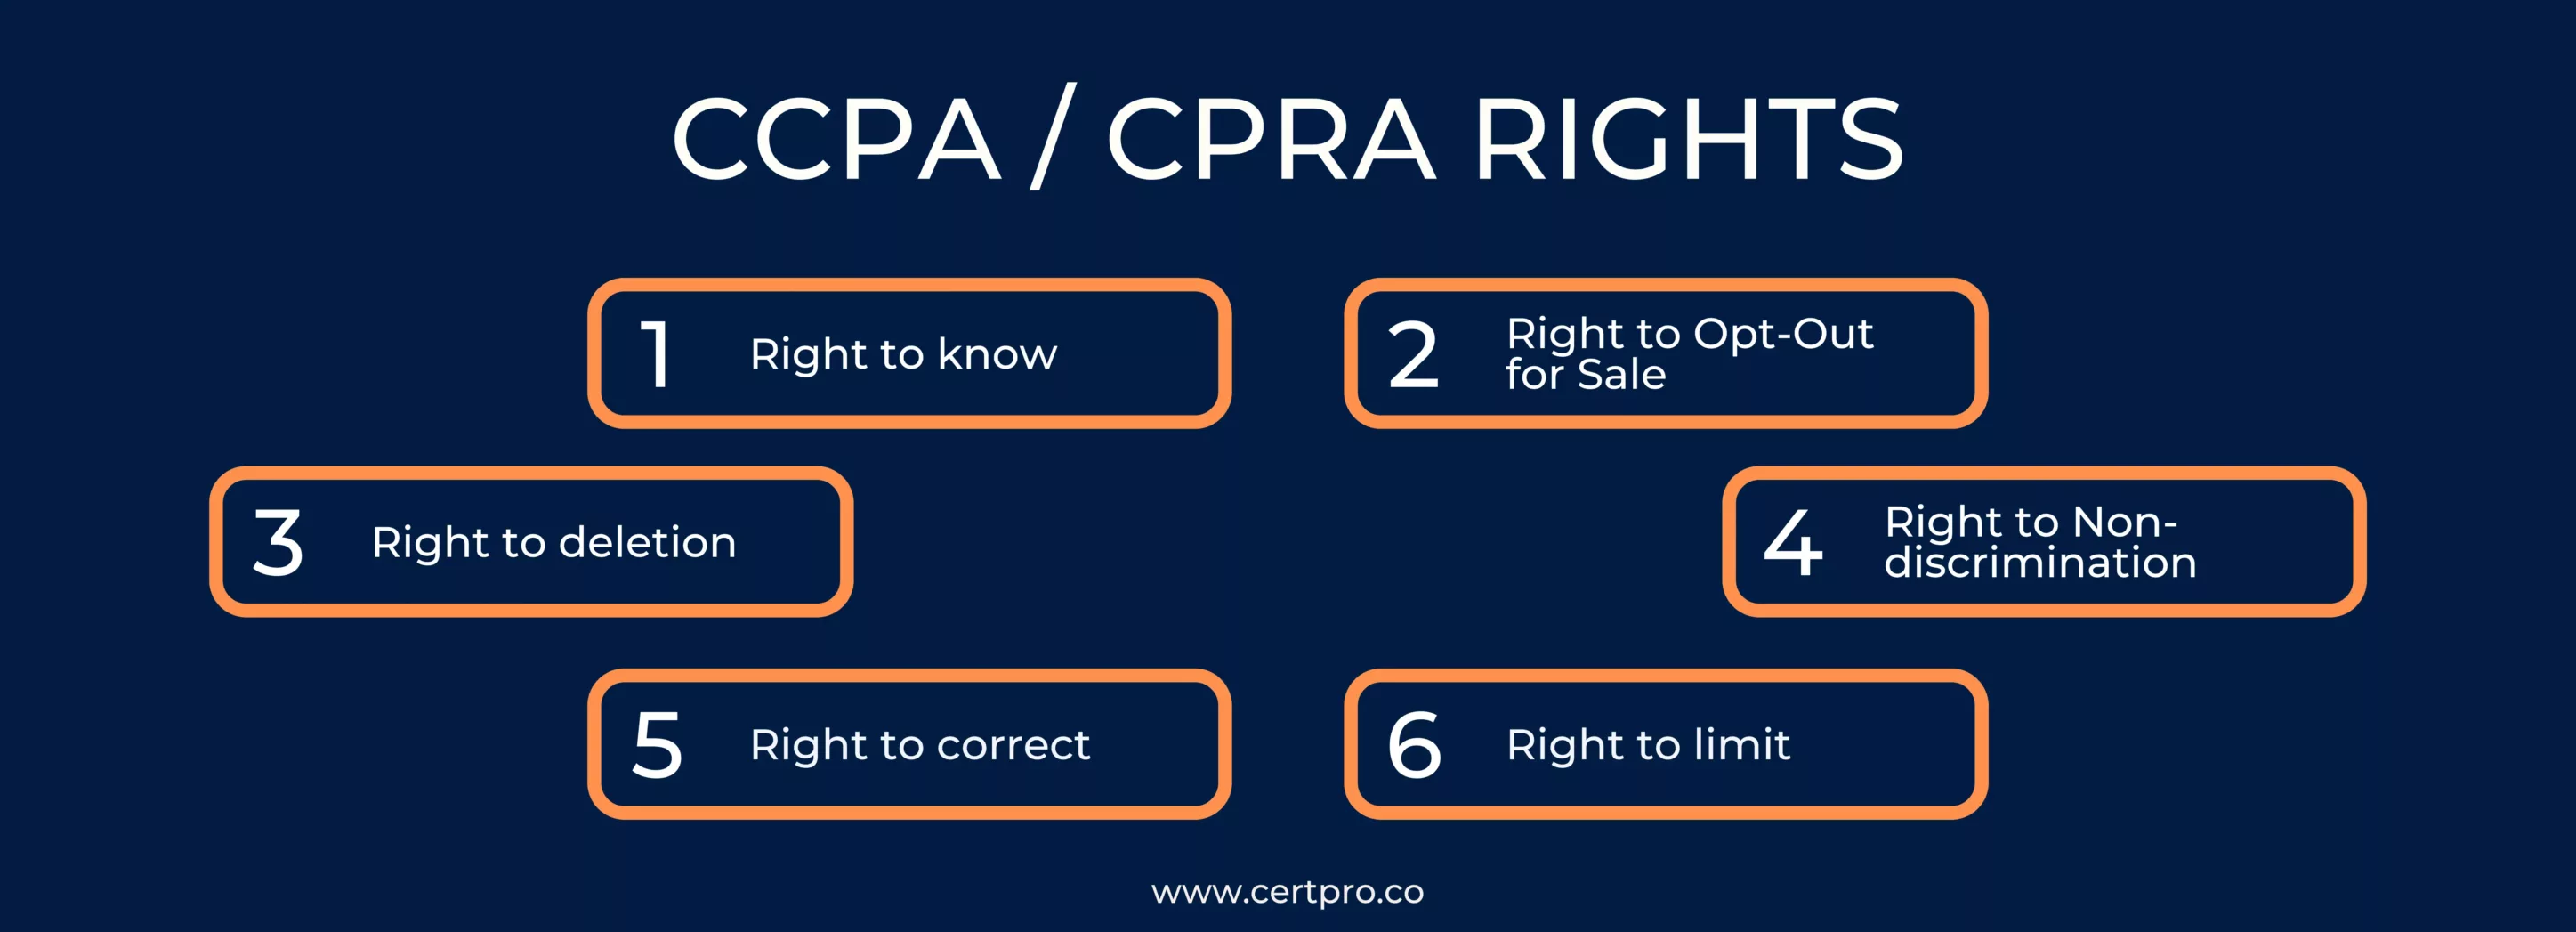 CCPA-CPRA Rights